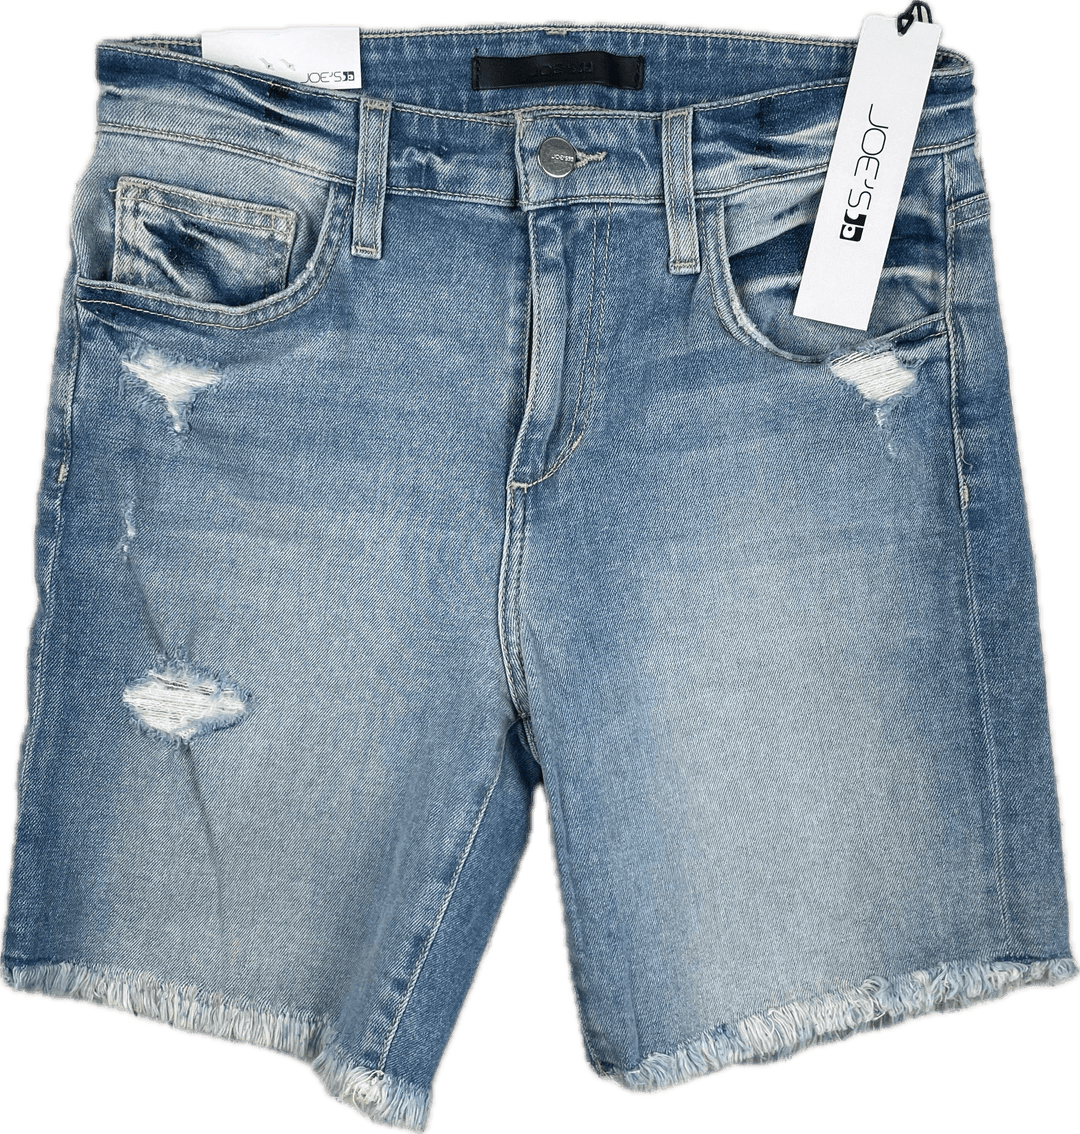 NWT - Joes Jeans 'Shasta' Bermuda Jean Shorts- Size 26 - Jean Pool